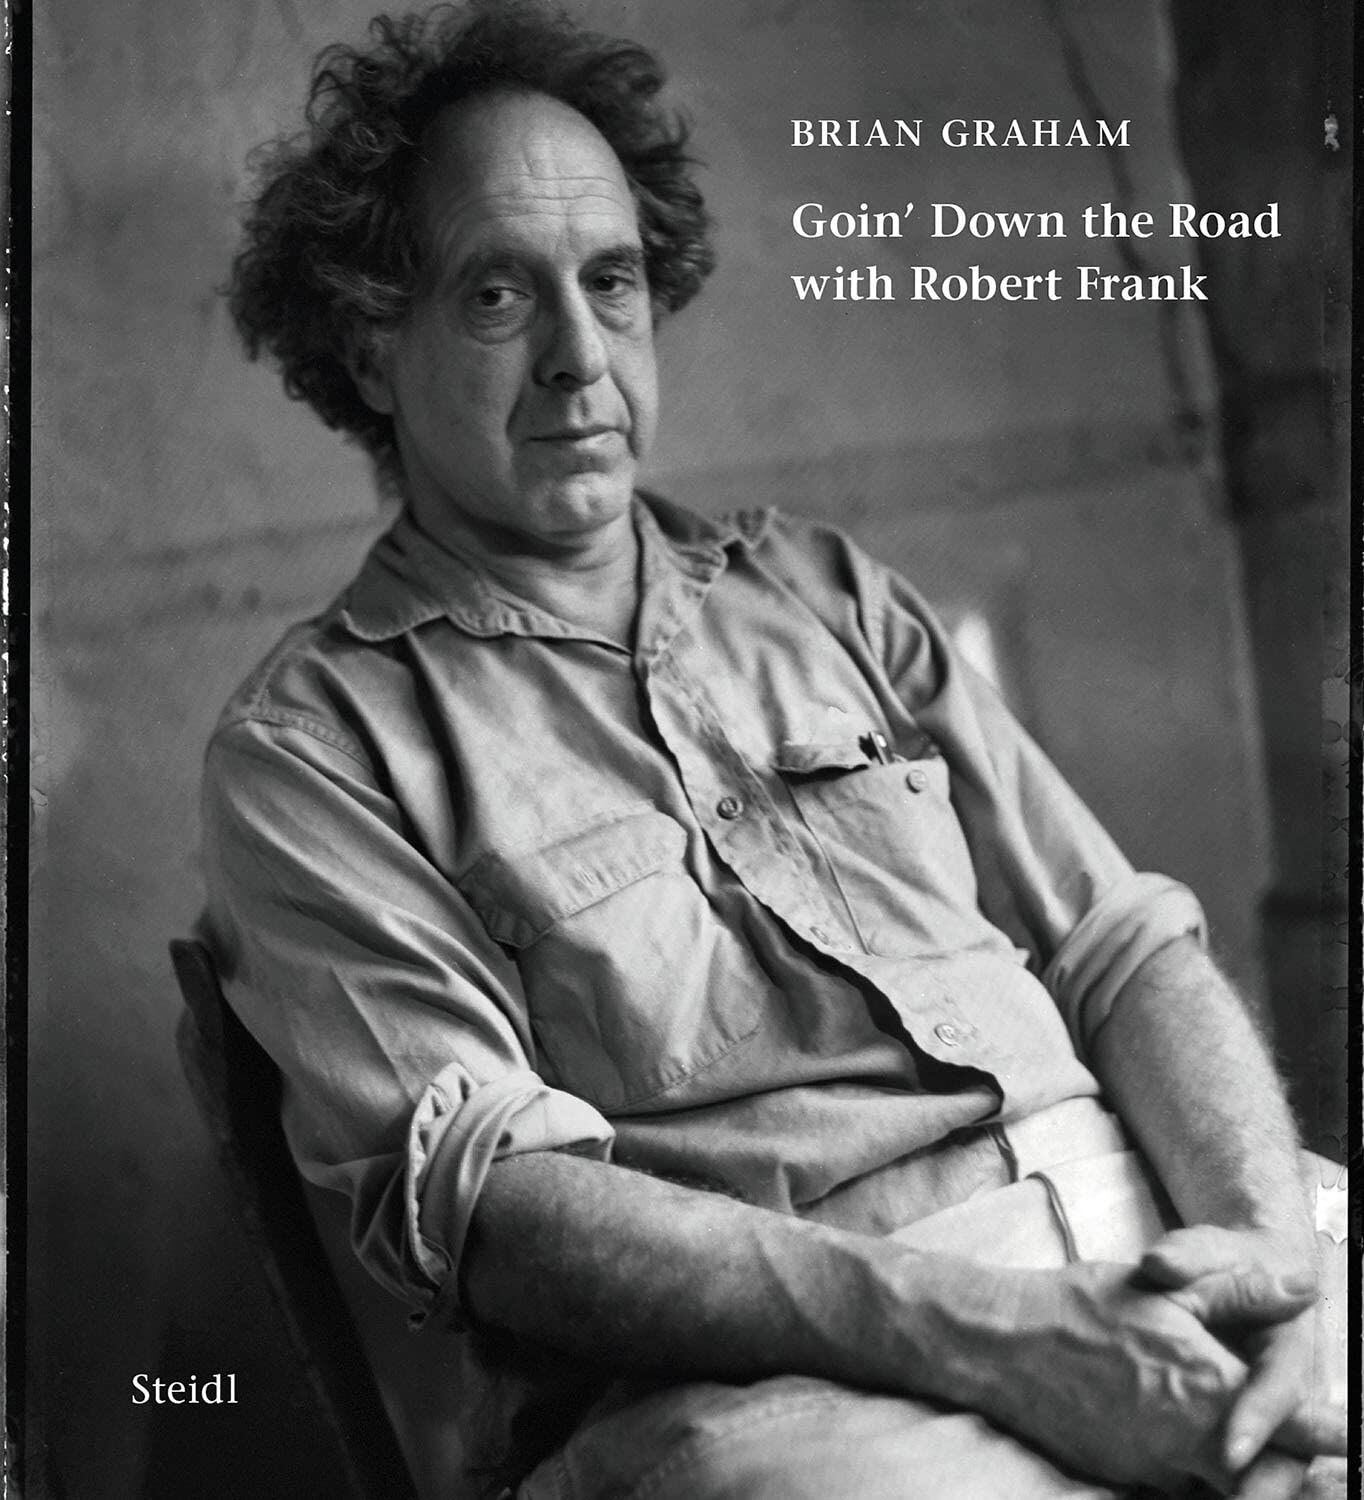 Portada del libro 'Goin' Down the Road with Robert Frank' de Brian Graham editado por Steidl. 